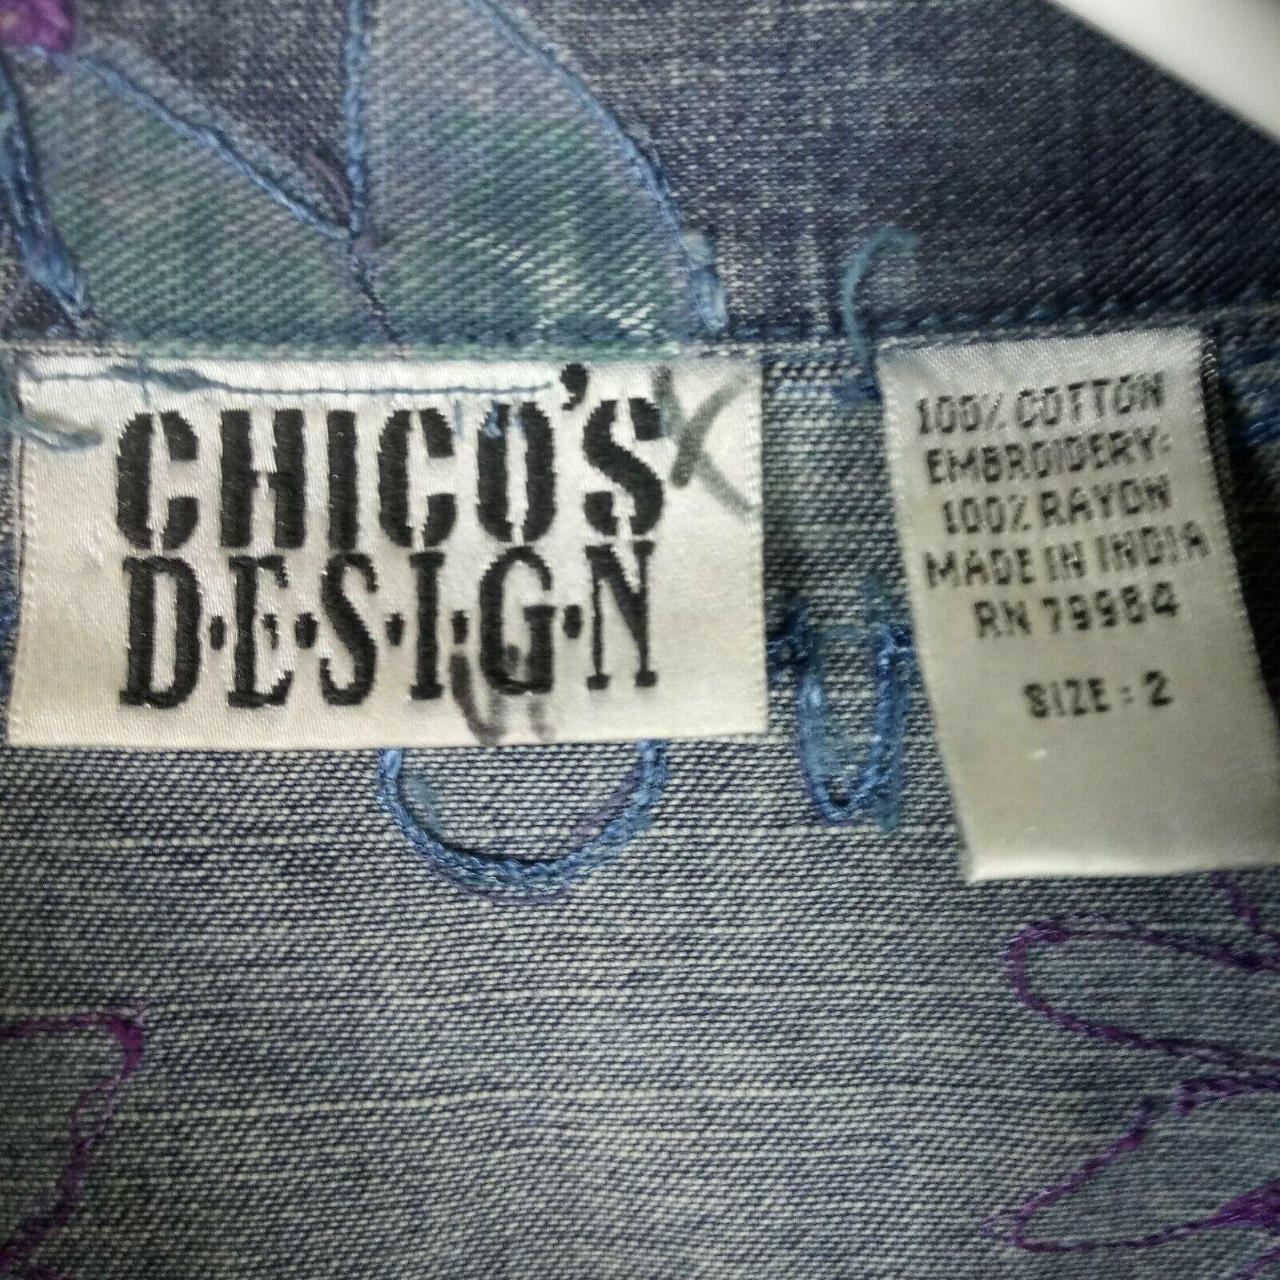 Chico’s Design Women’s Size 3 Jean Jacket RN 79984